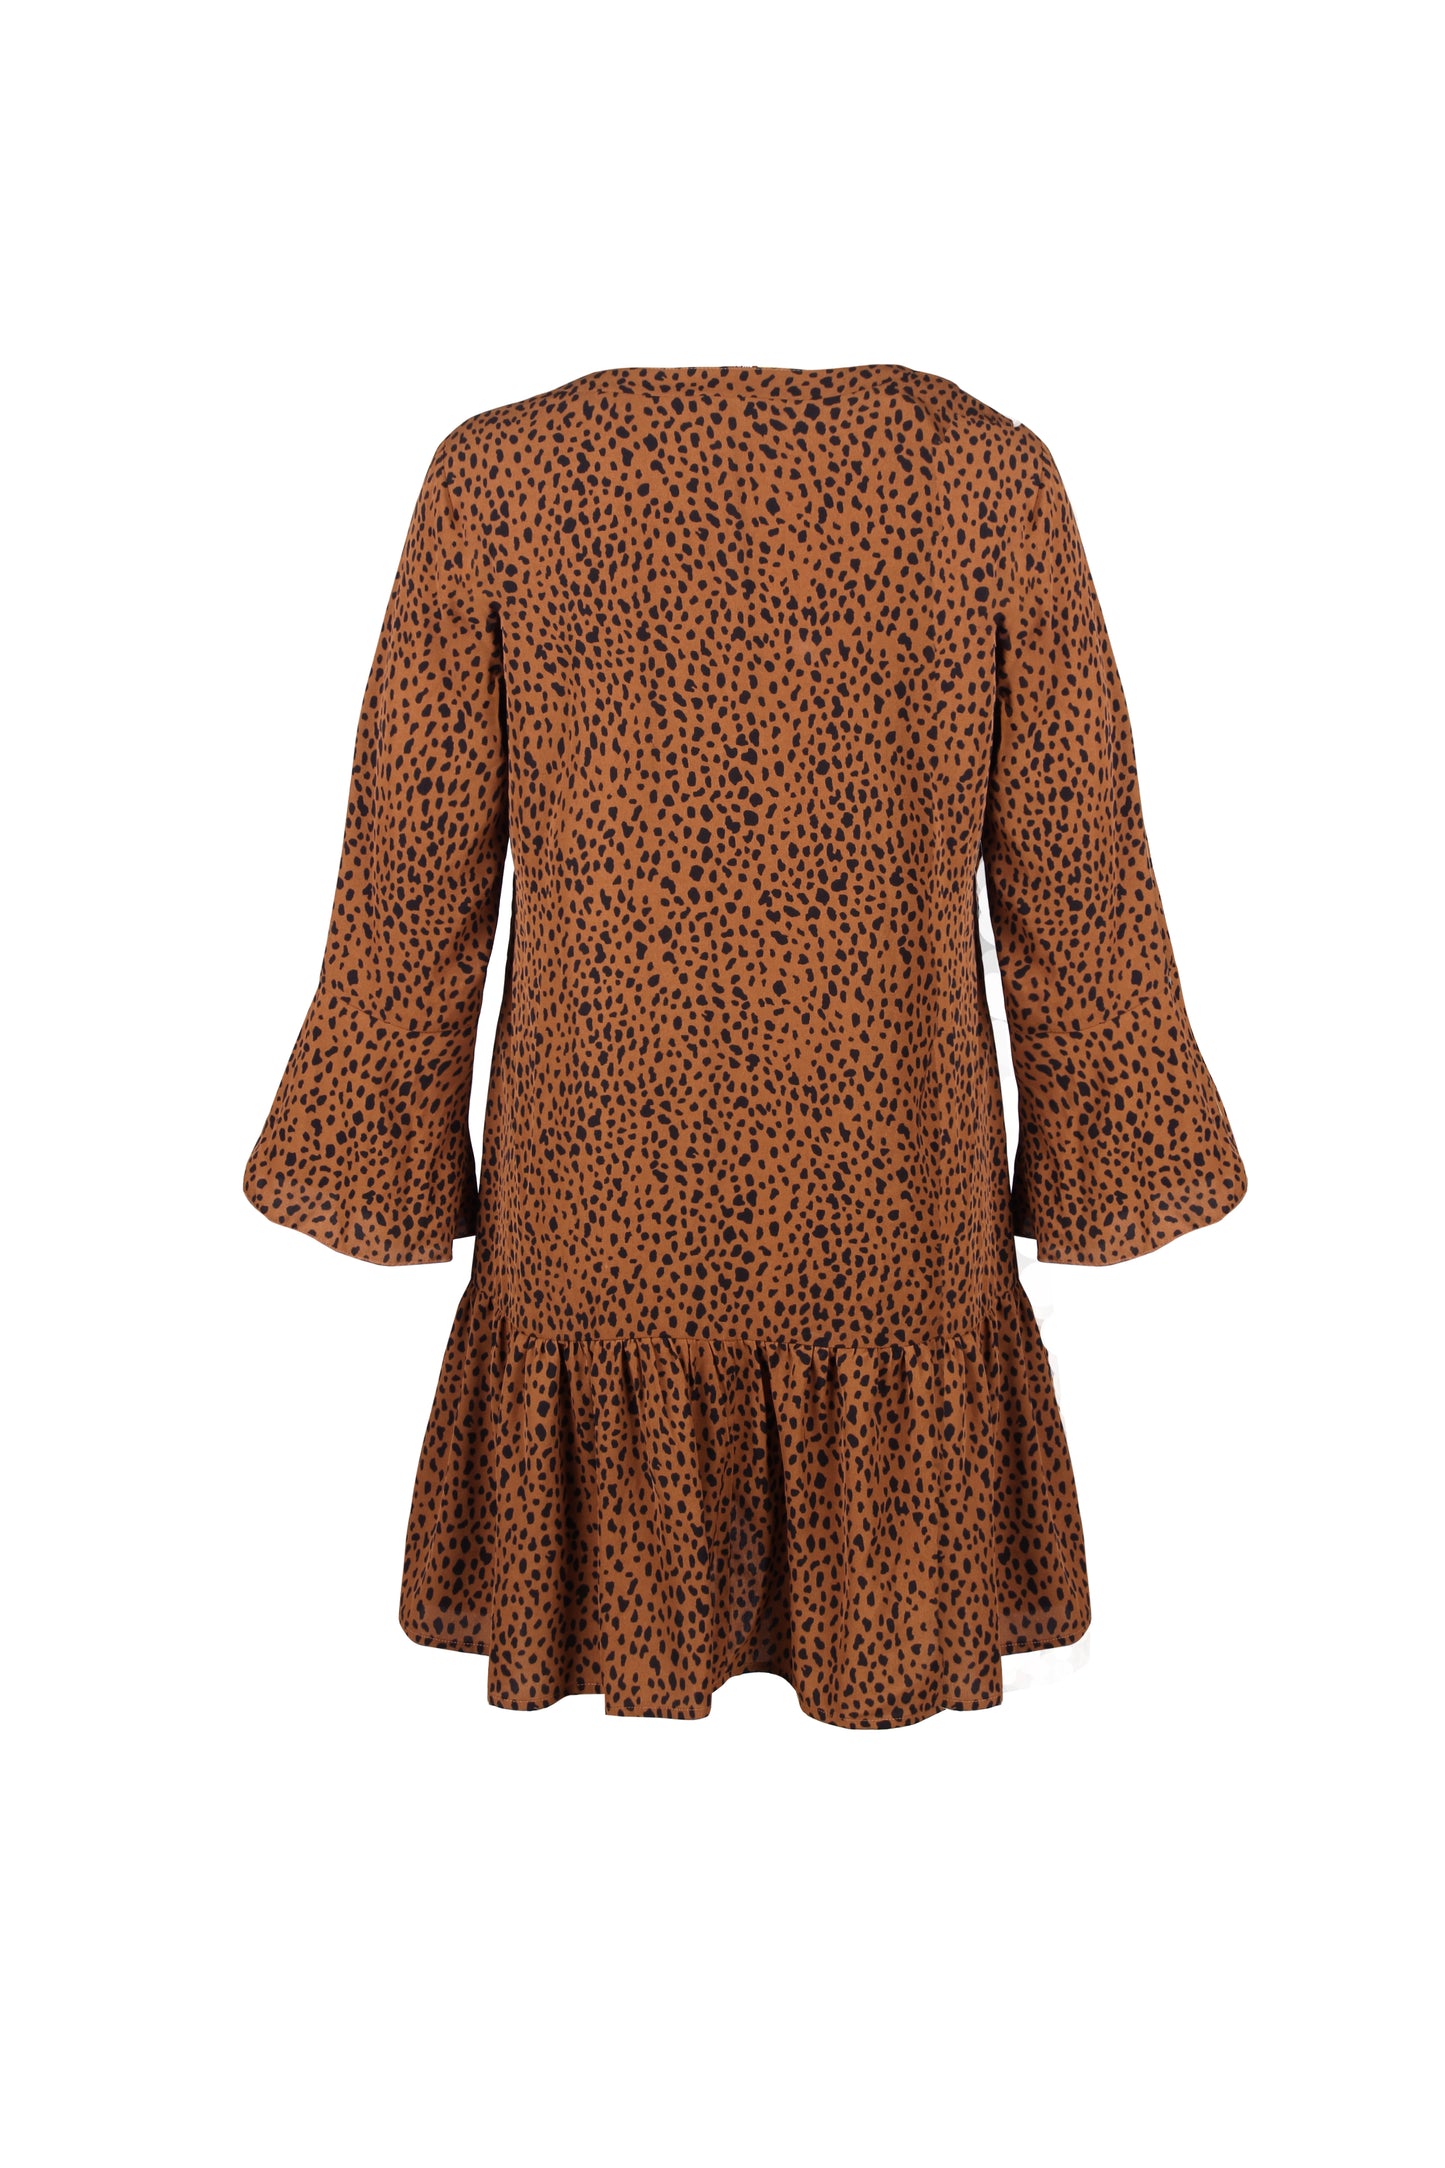 YESFASHION Commuter Dress Leopard Printing Sexy Skirt